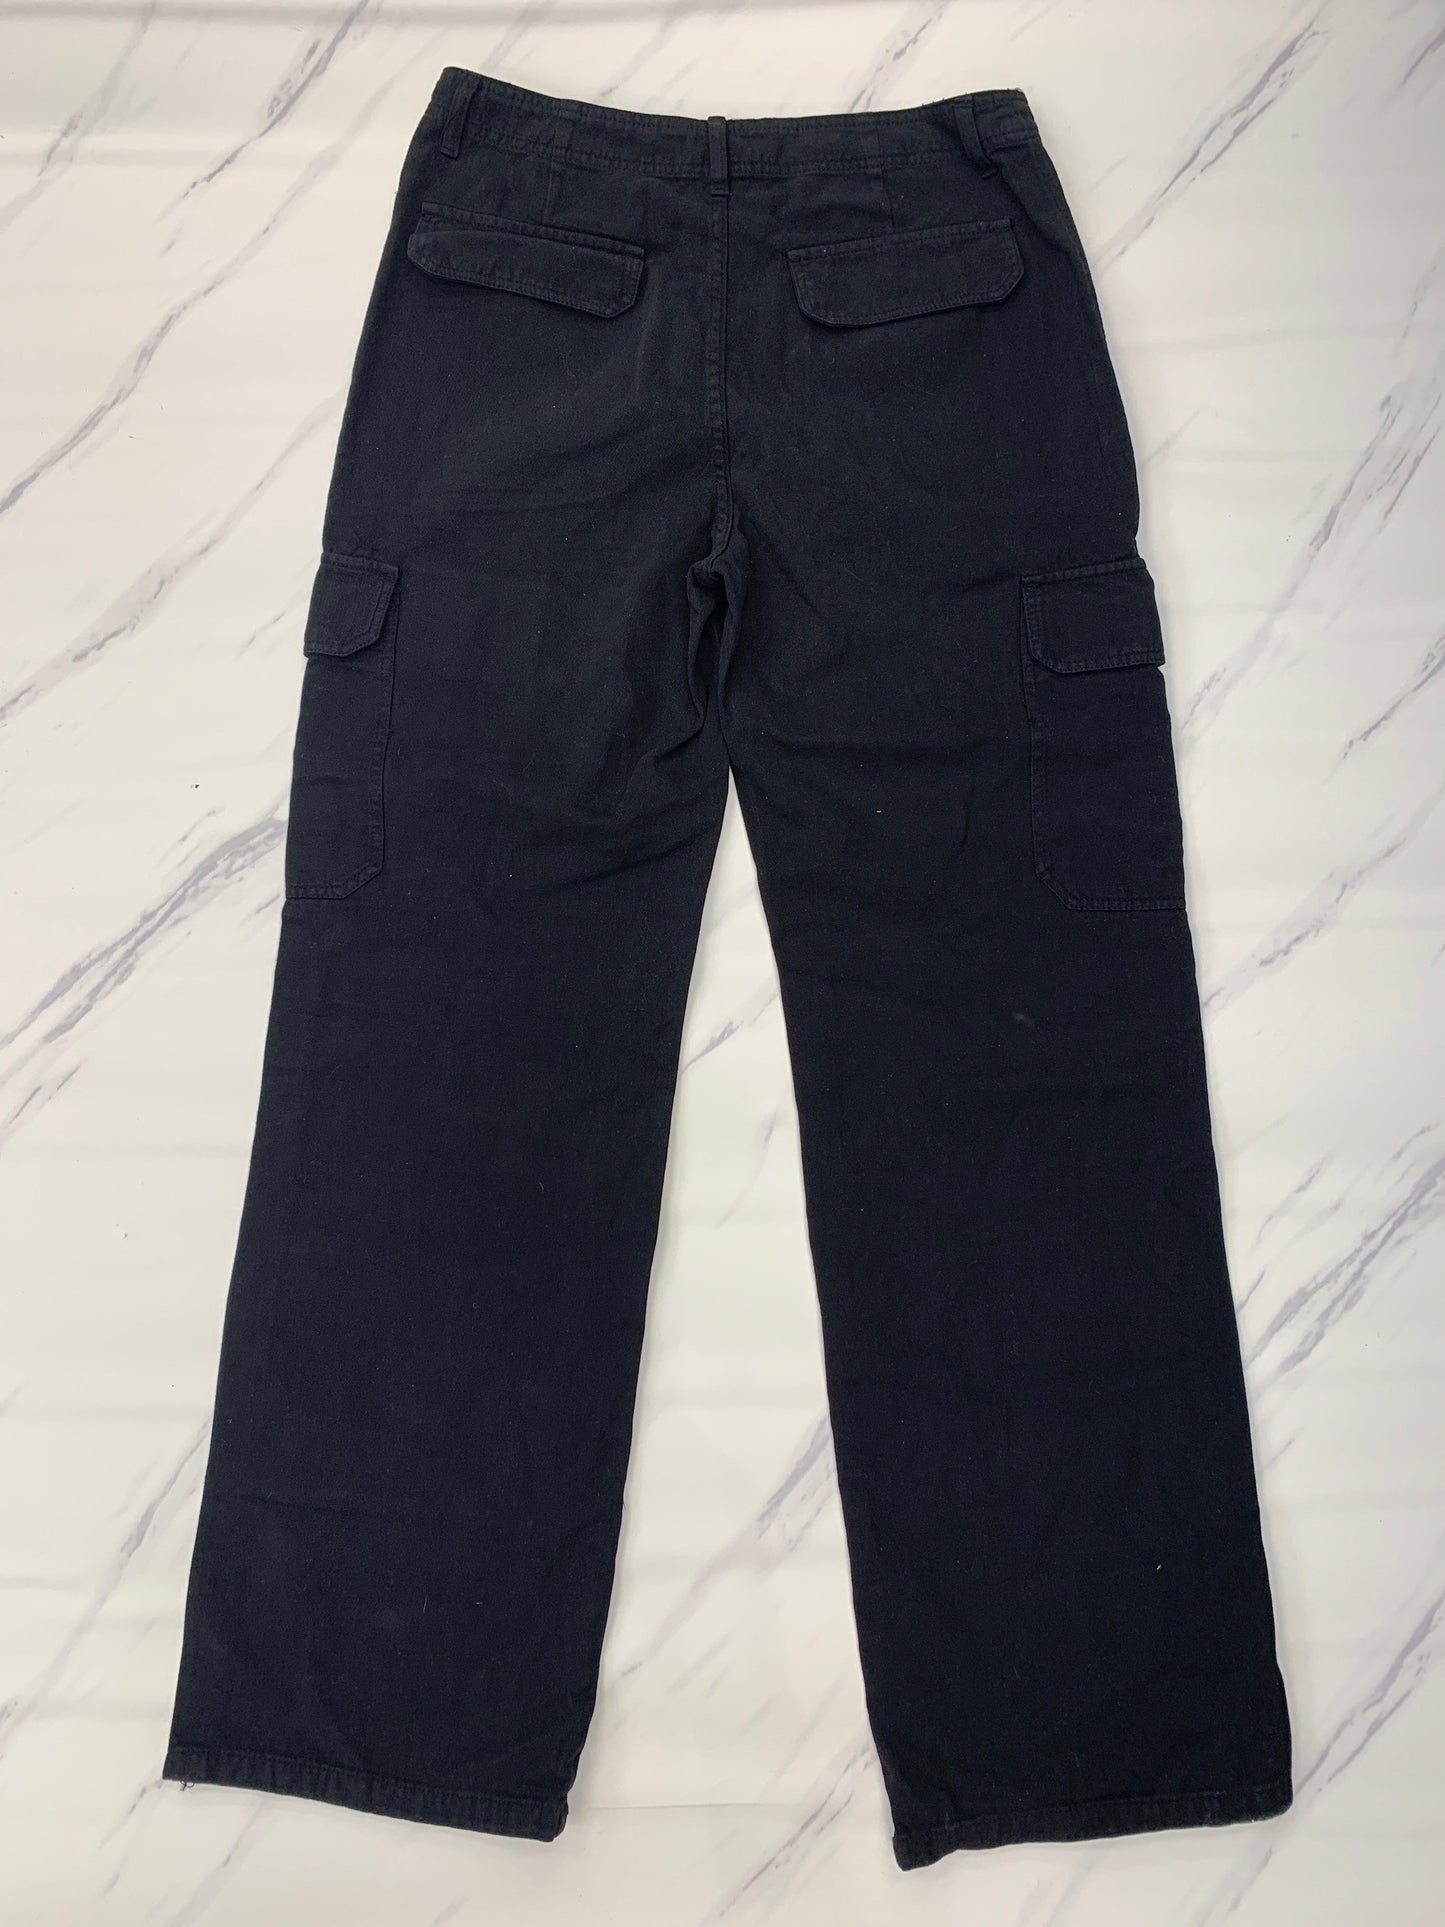 Black Pants Cargo & Utility Zara, Size 10